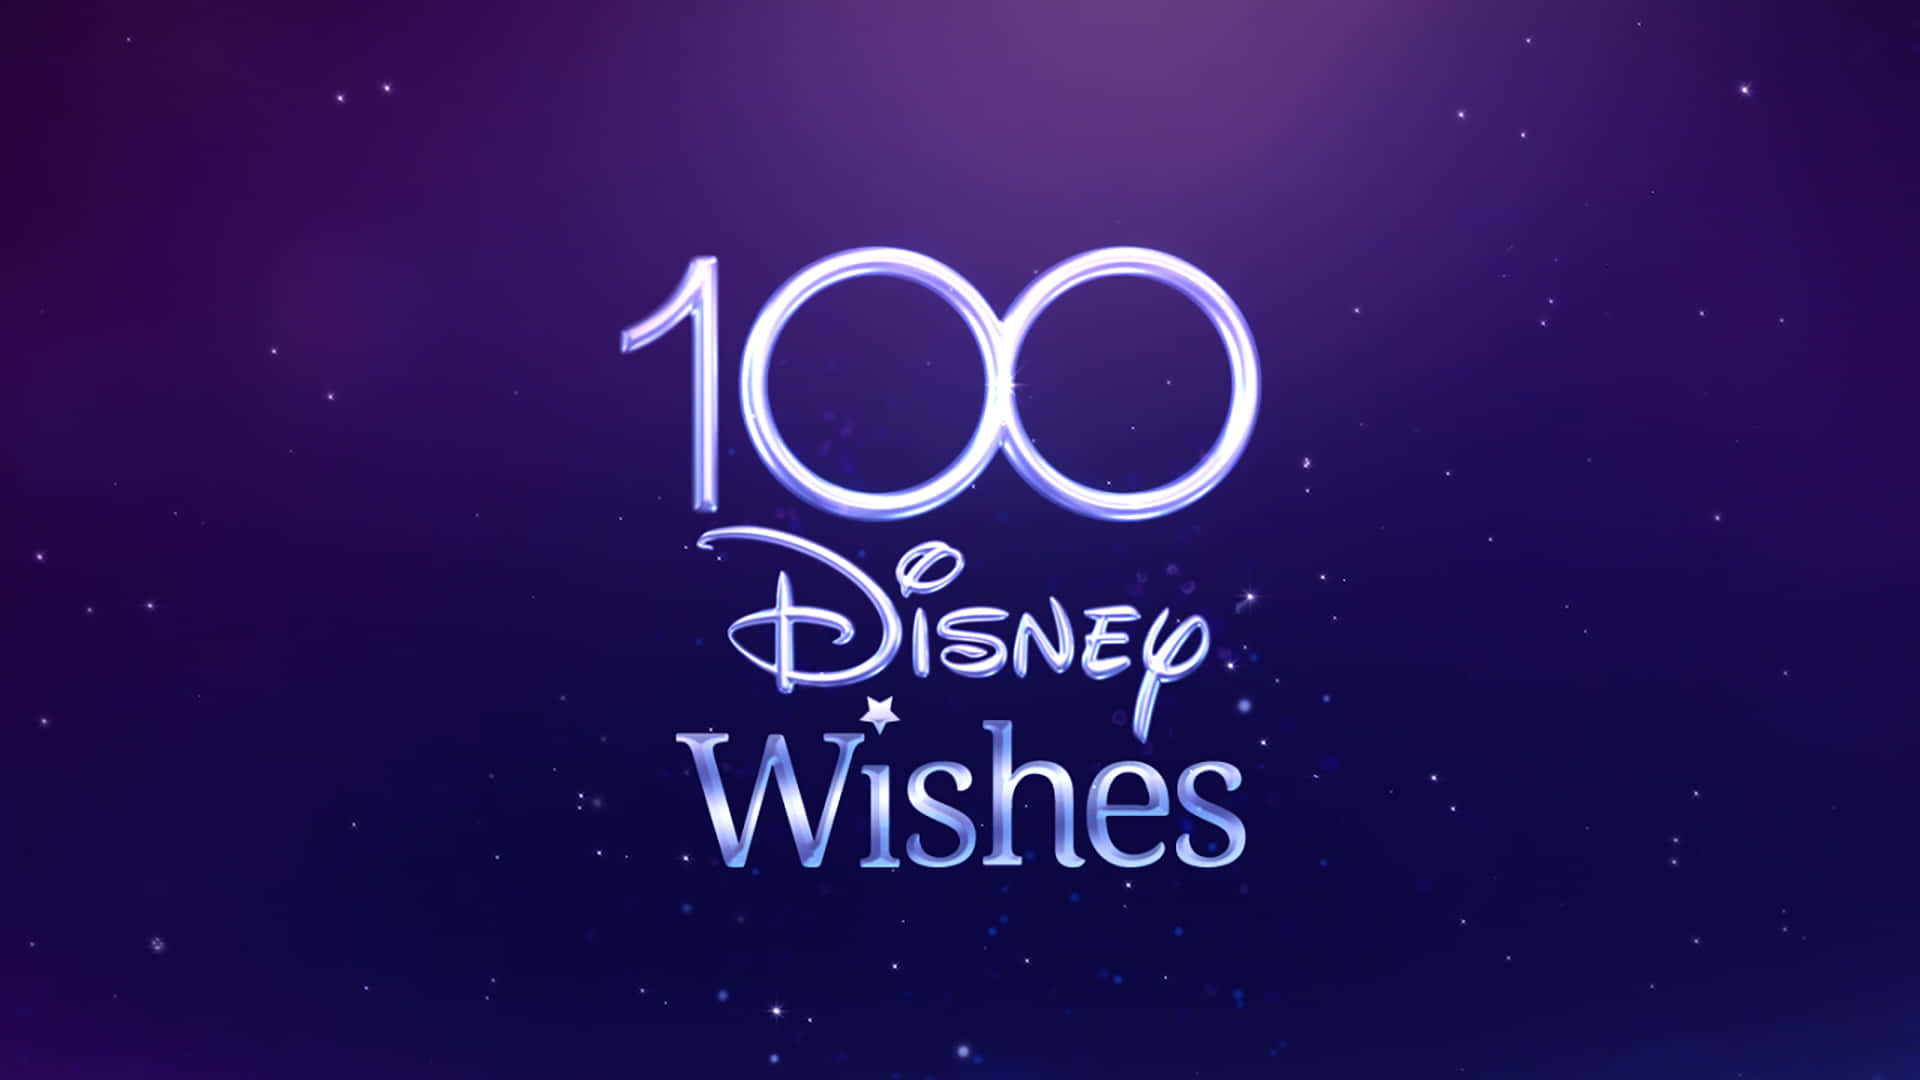 Disney100 Wishes Celebration Wallpaper